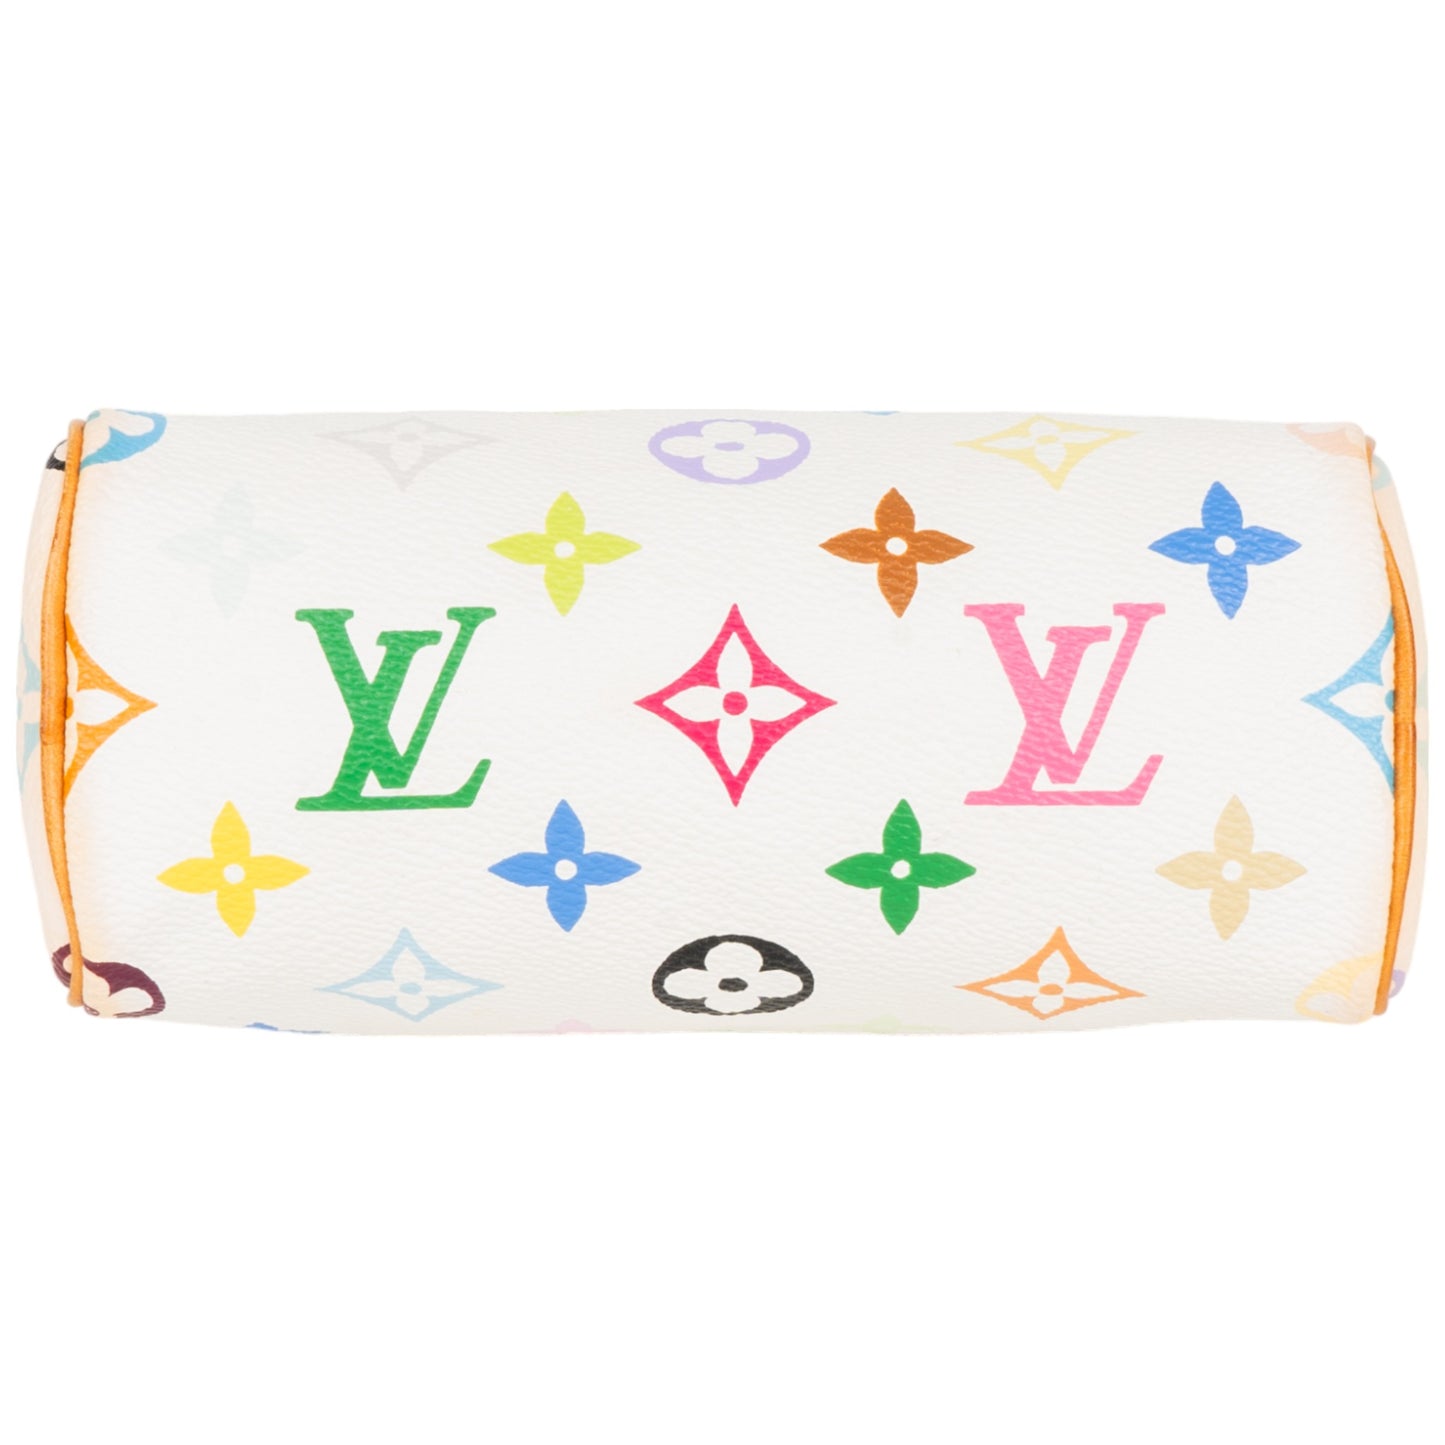 Louis Vuitton Murakami Multicolor Mini Speedy Handbag